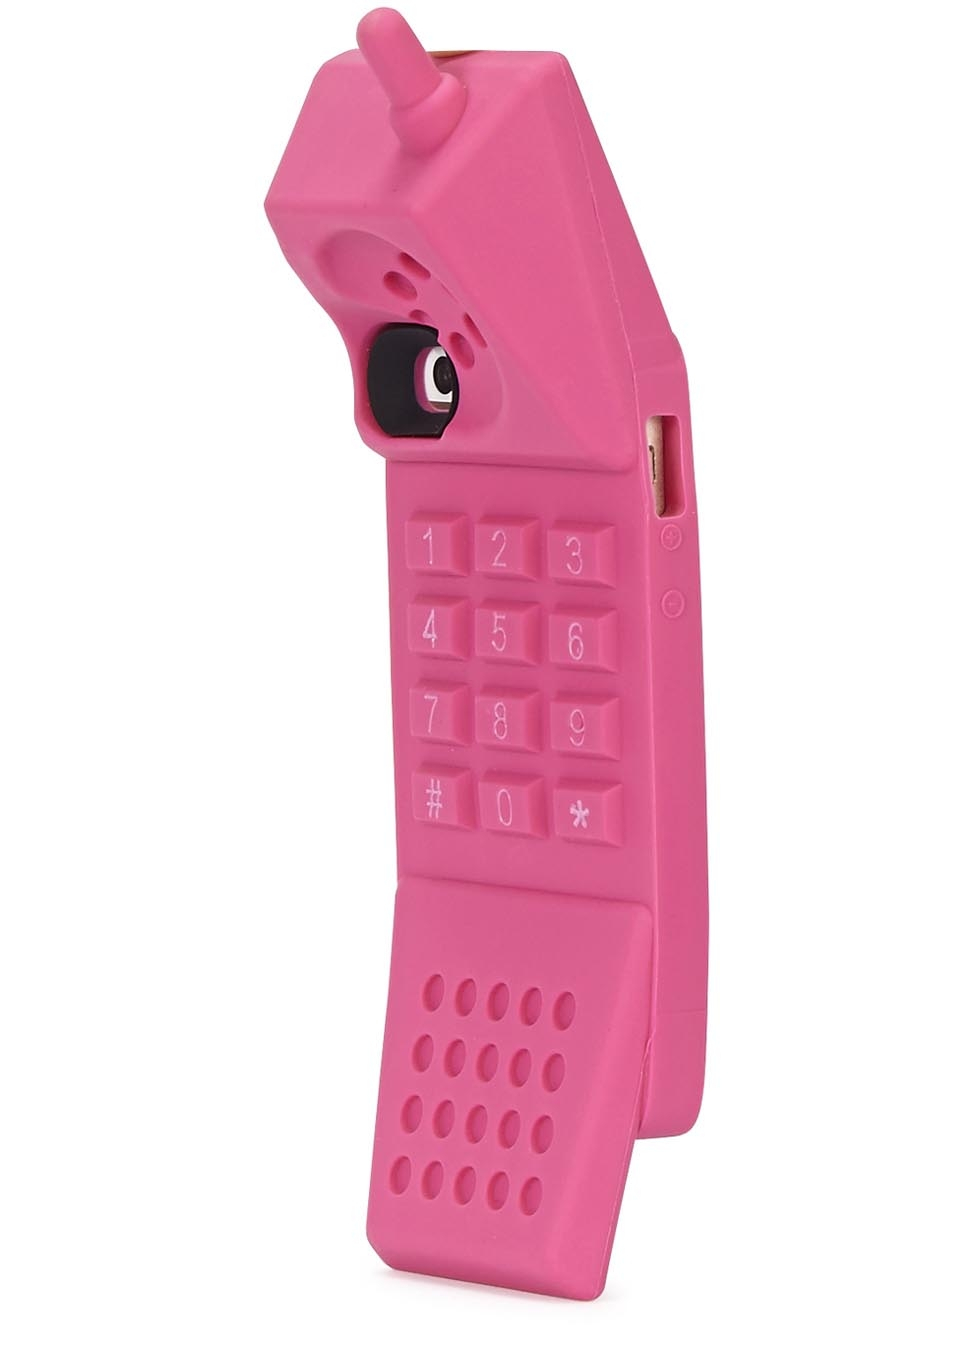 moschino pink phone case